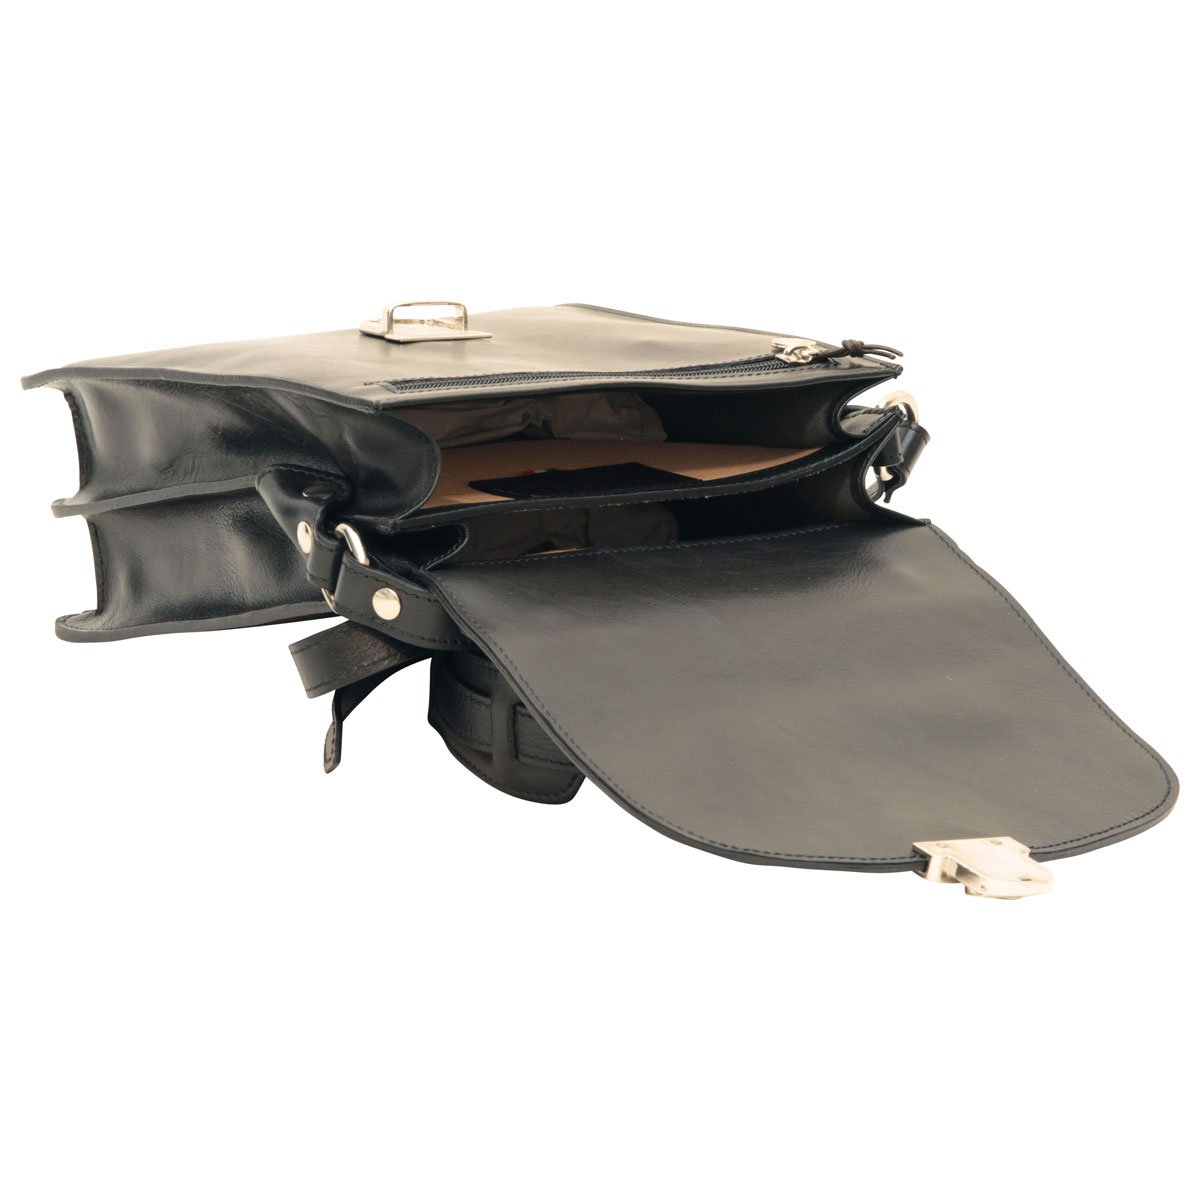 Classica II Leather Satchel - Black | 079689NE US | Old Angler Firenze